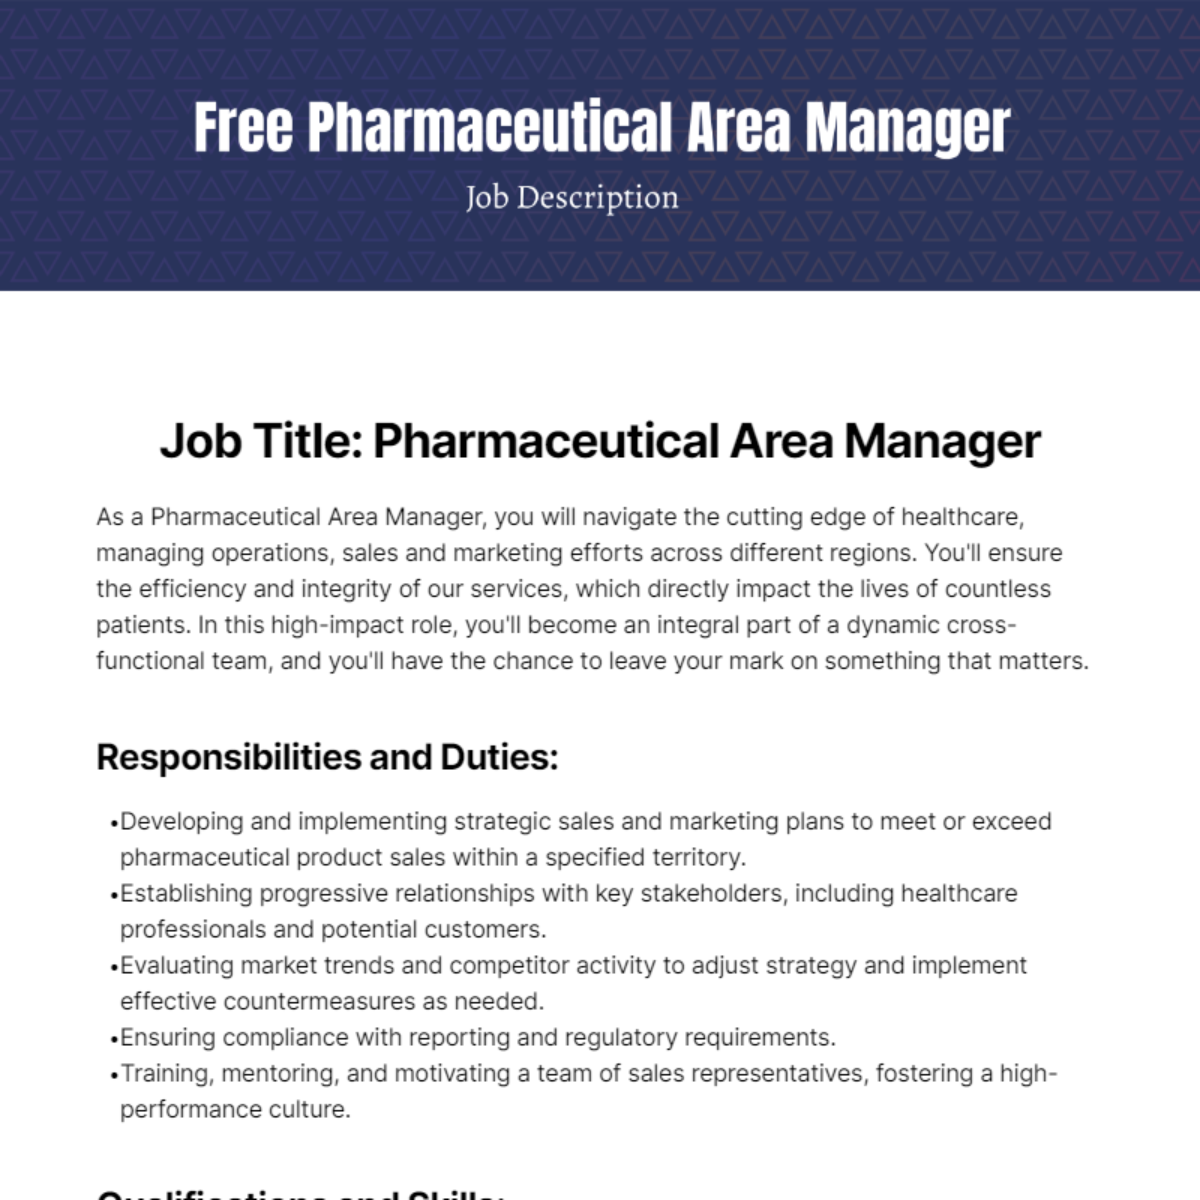 Free Pharmaceutical Area Manager Job Description Template